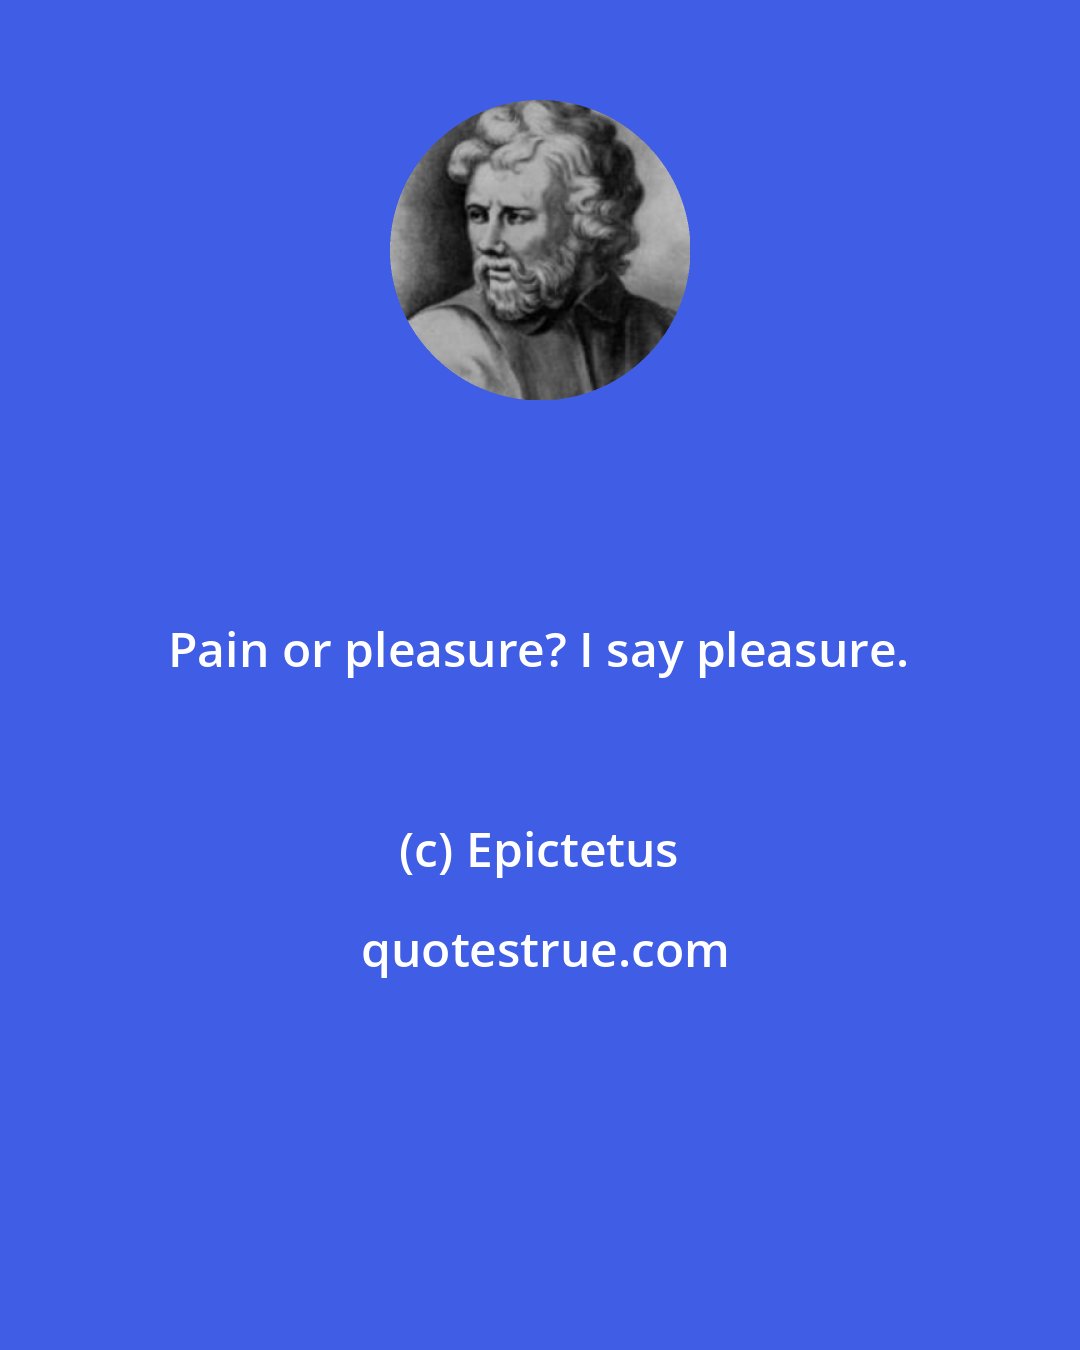 Epictetus: Pain or pleasure? I say pleasure.